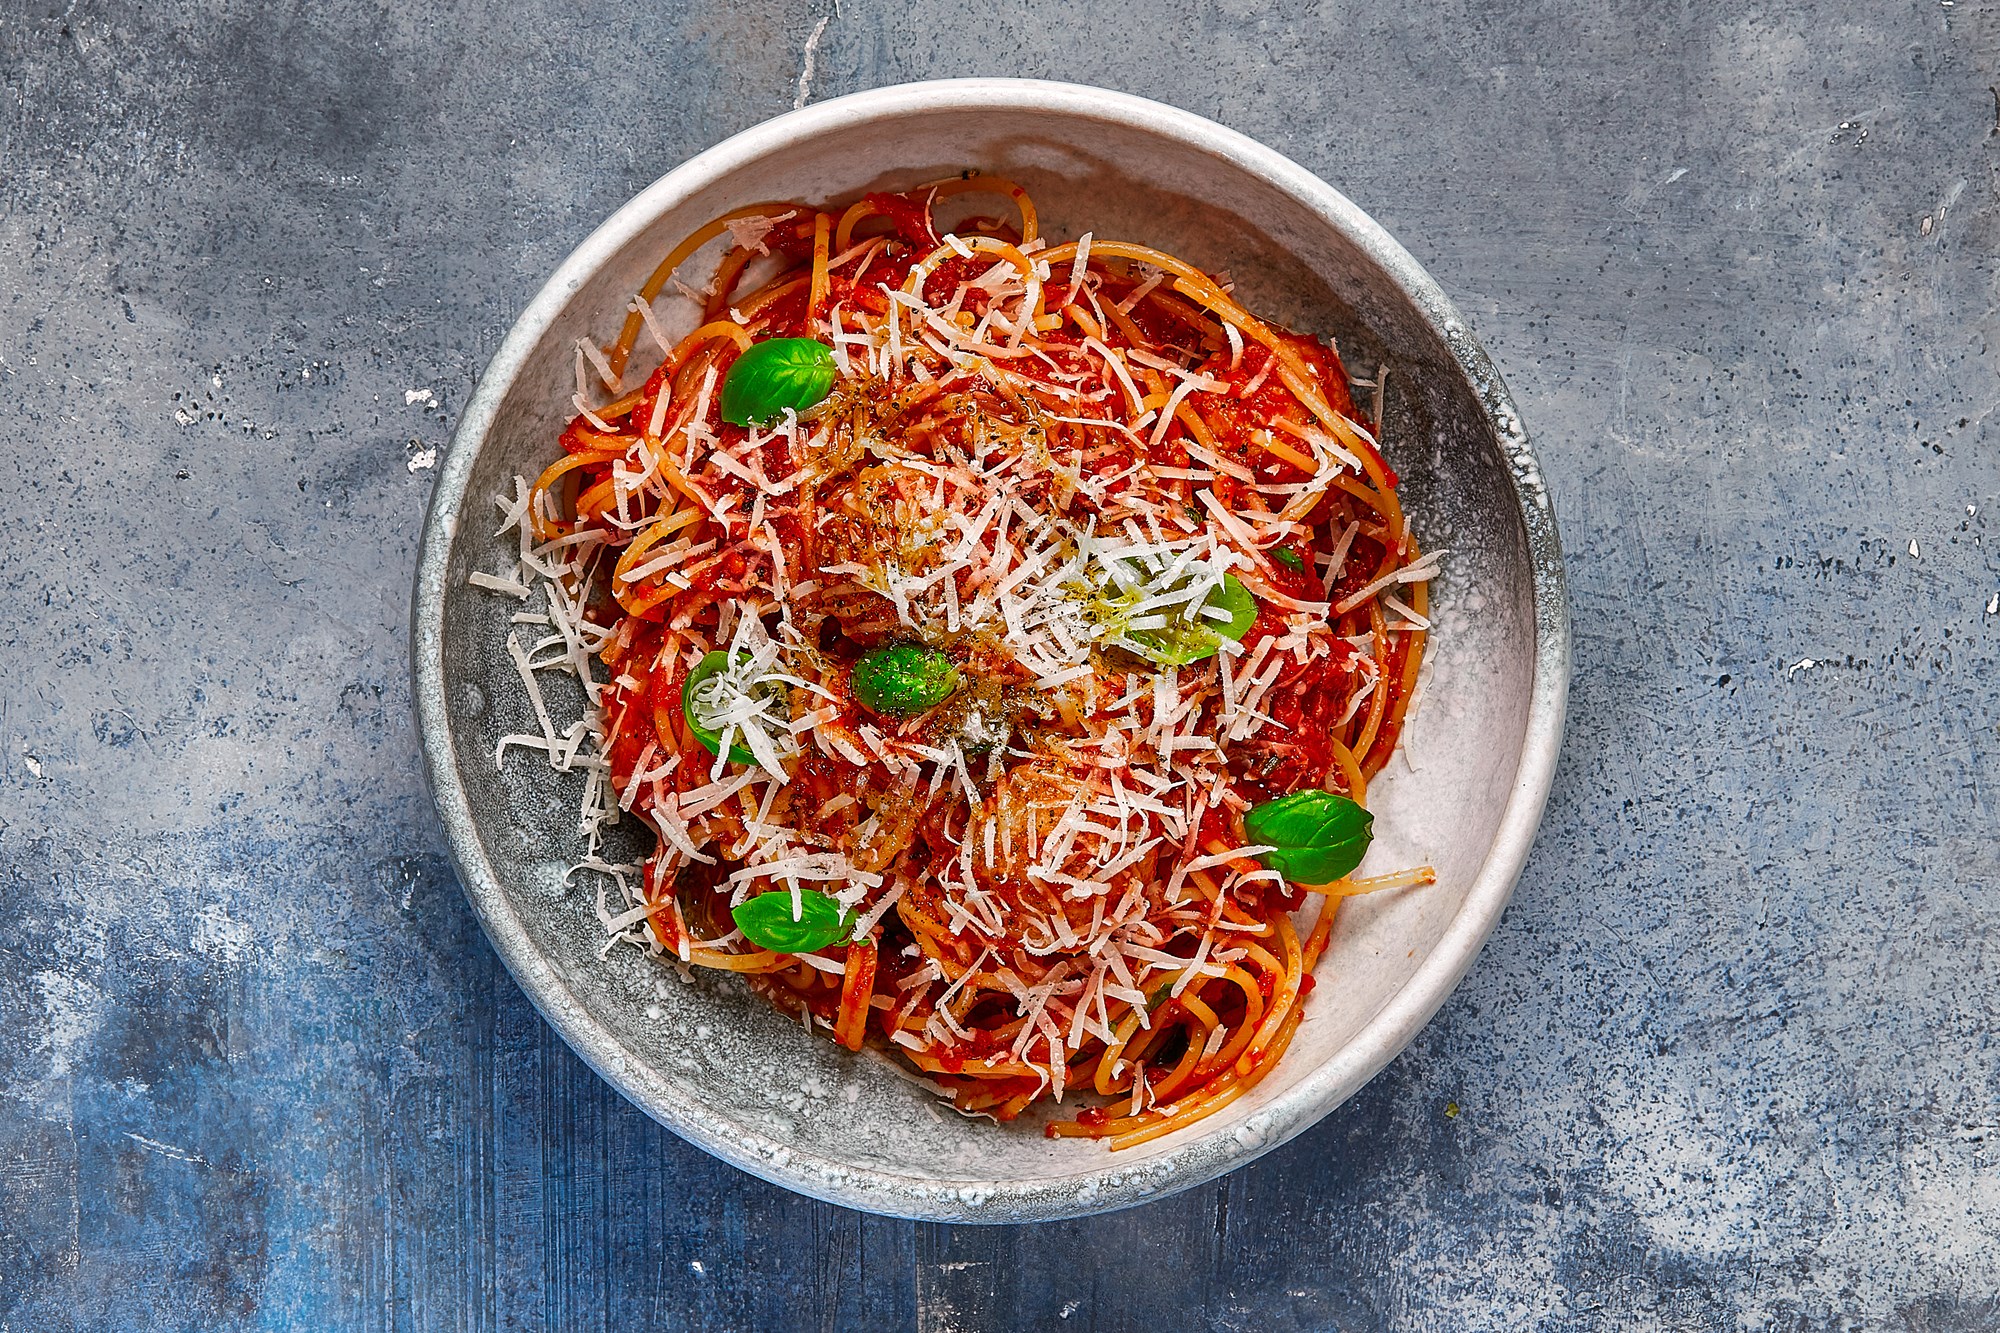 Postbud Association Snestorm Just-heat: Italienske kødboller i tomatsauce med spaghetti, basilikum og  parmesan - Opskrift fra Skagenfood.dk